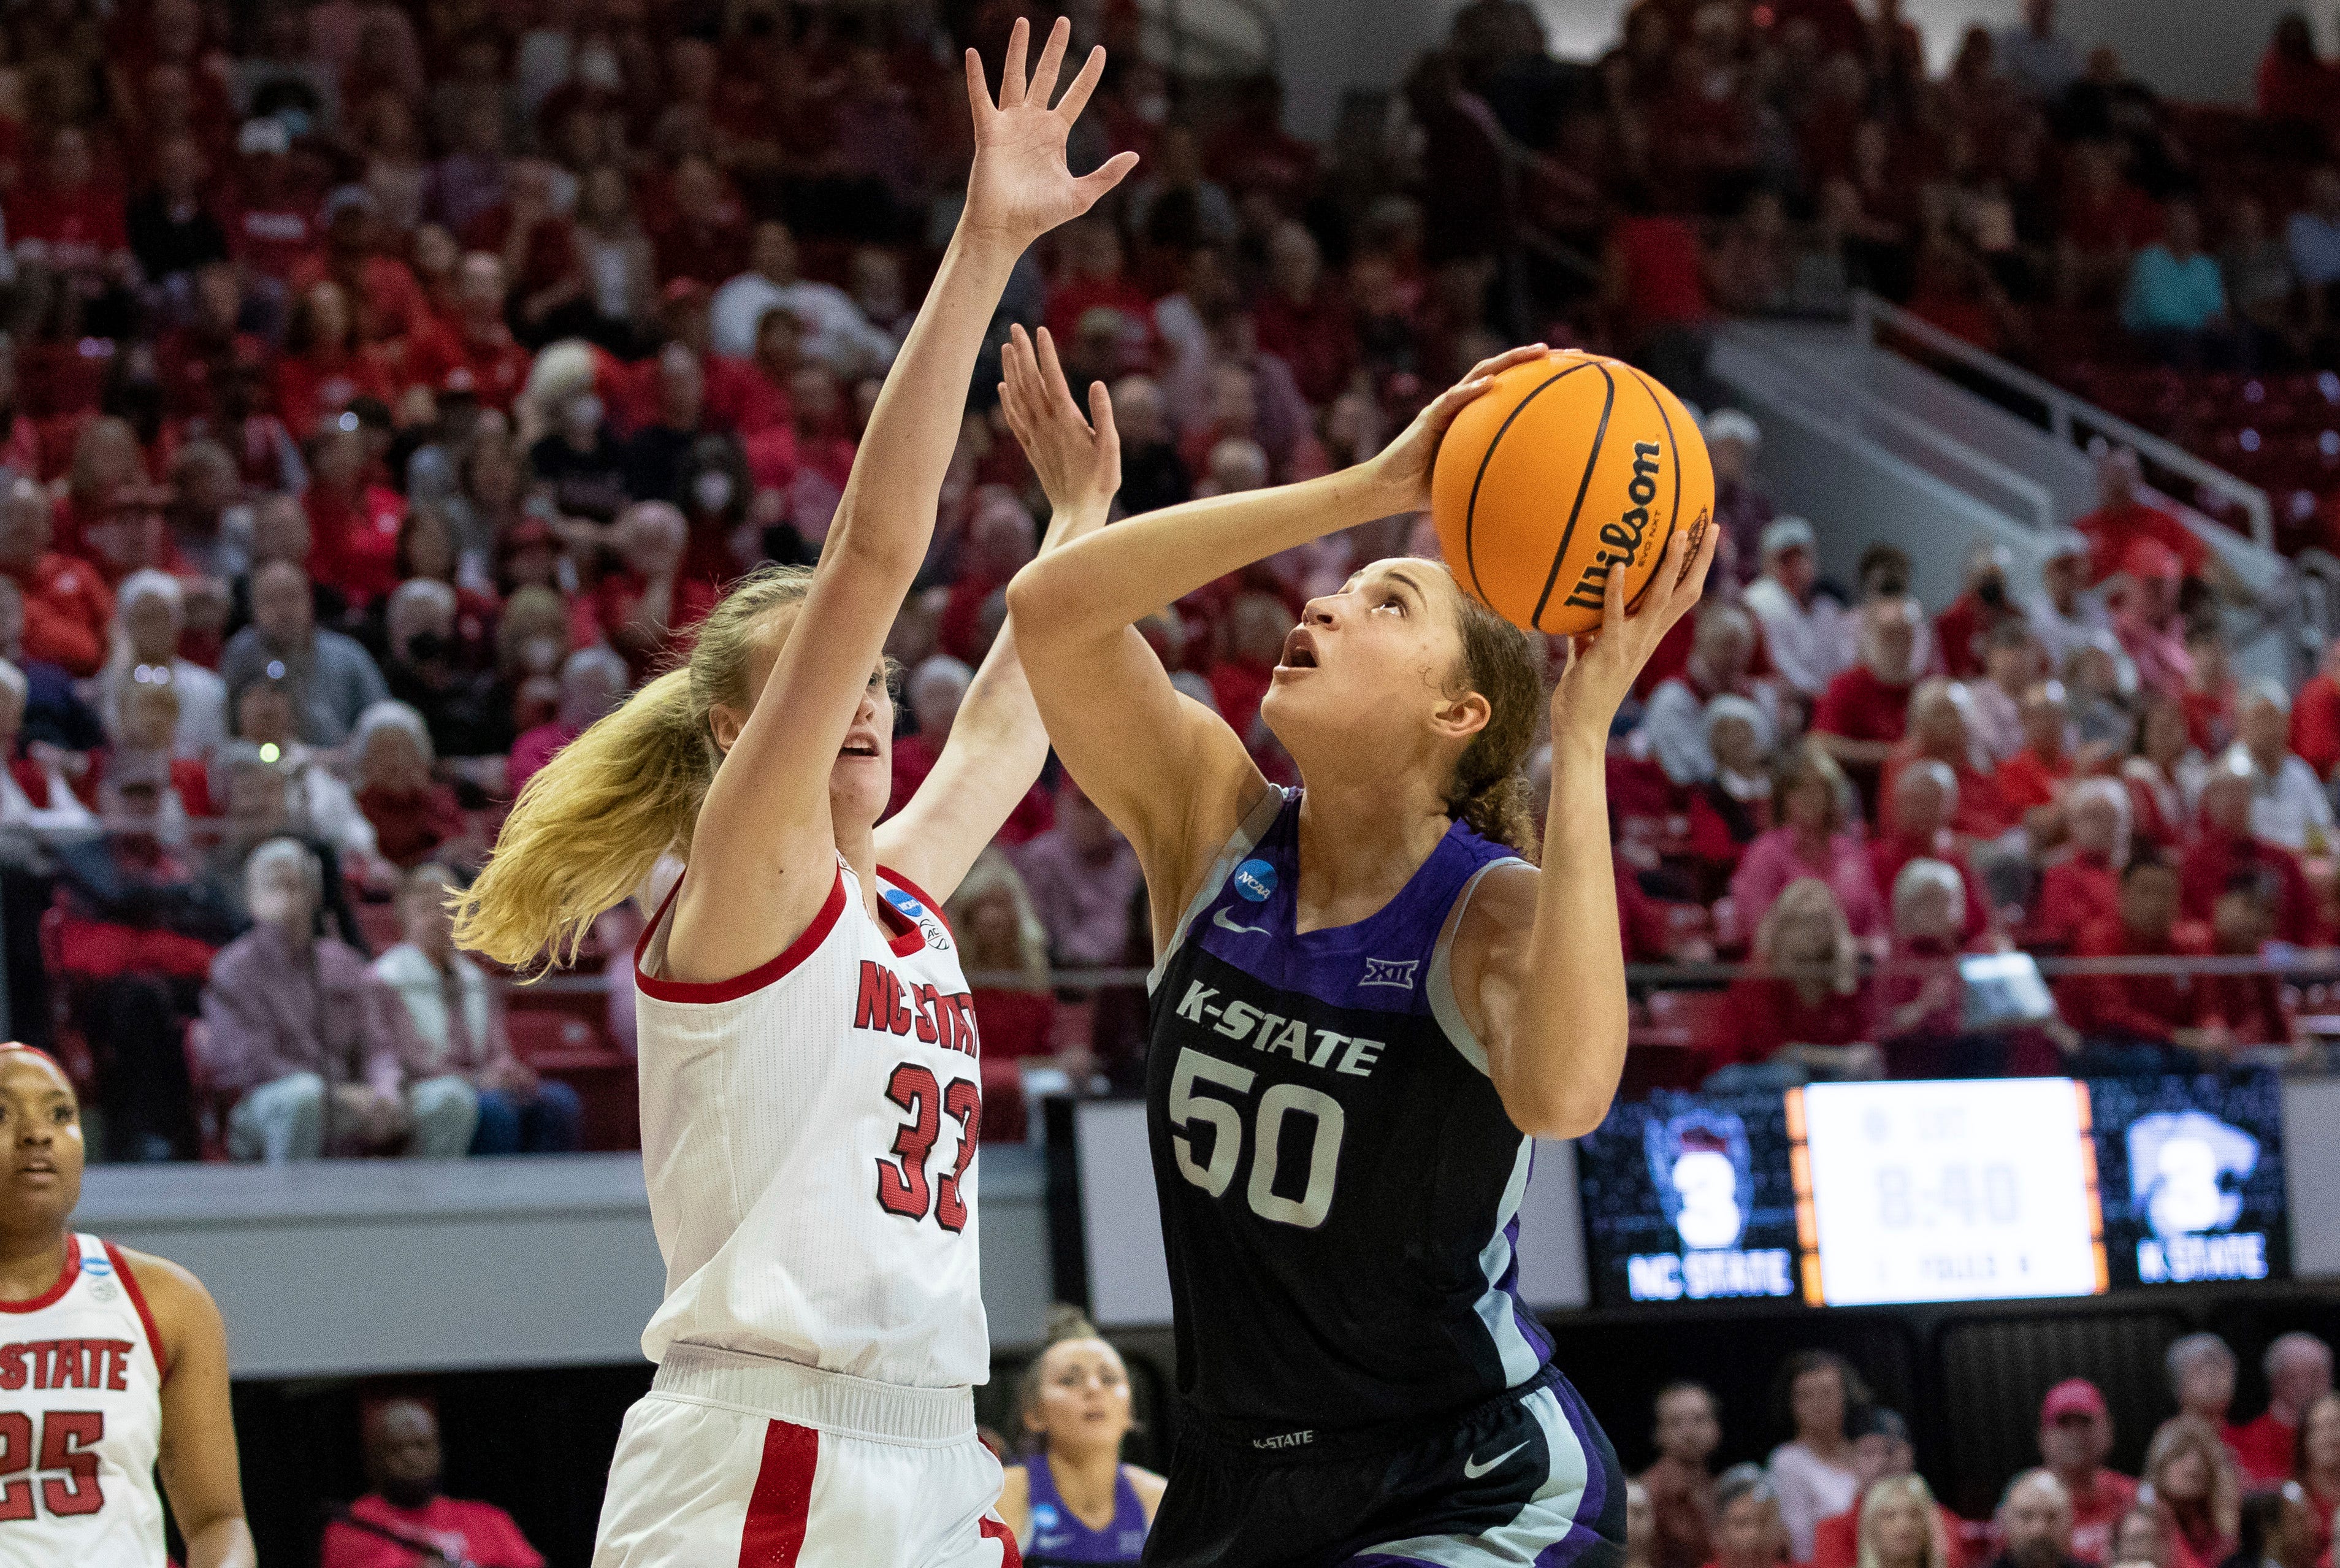 Kansas State women's basketball center Ayoka Lee lost for the season